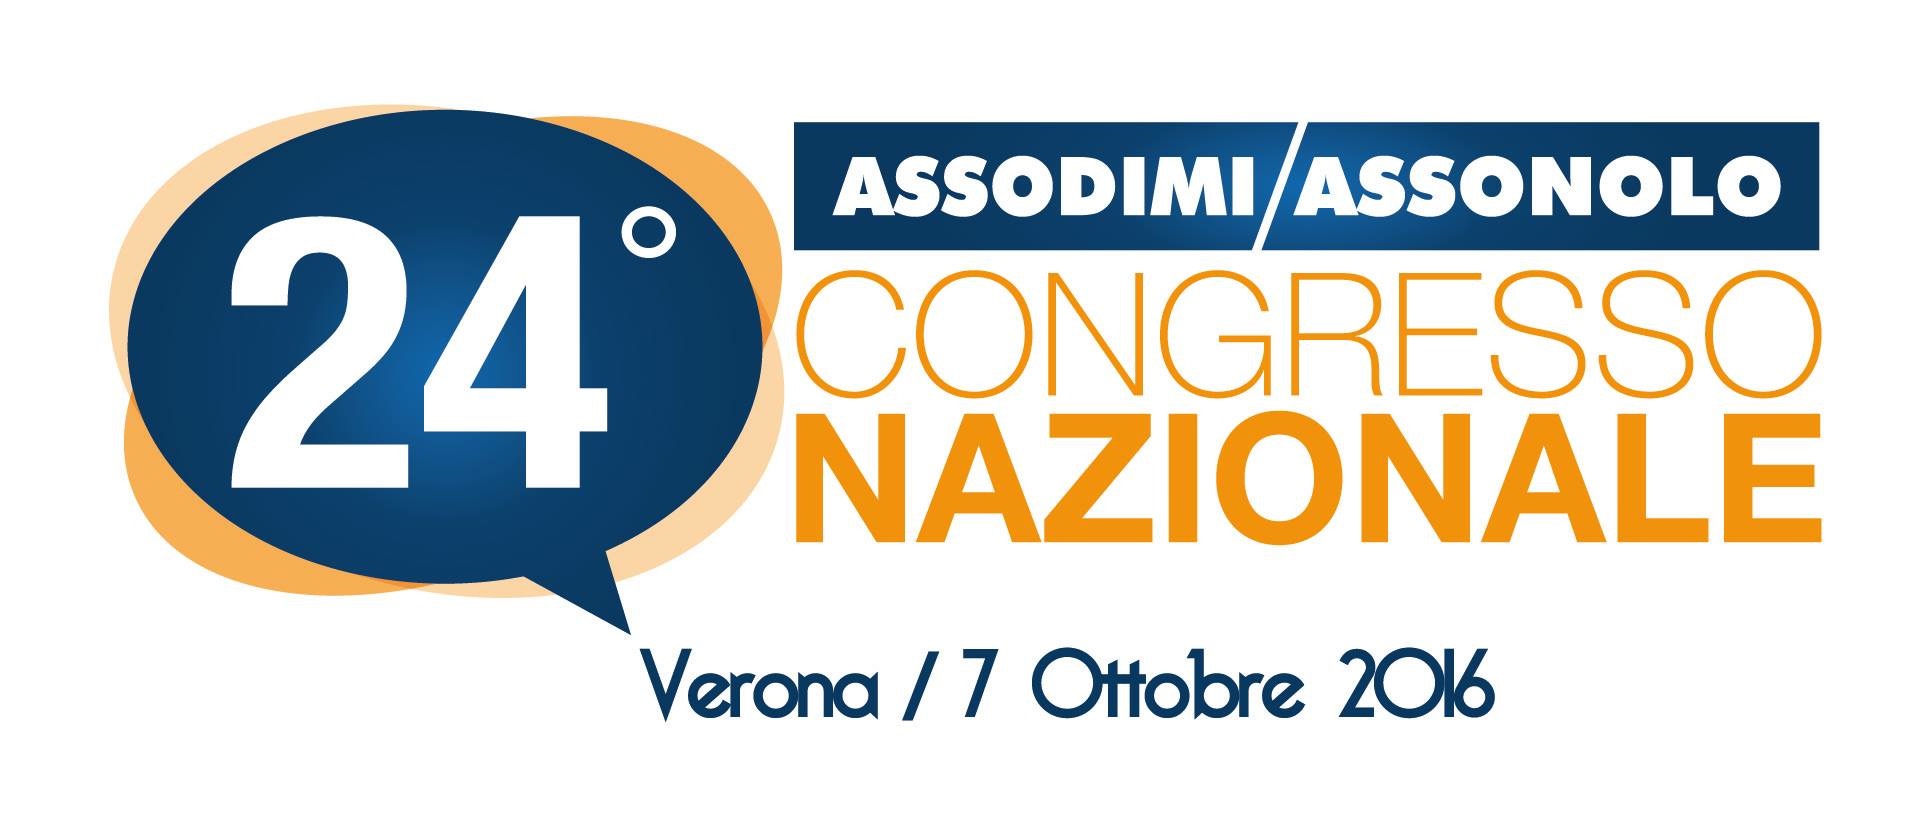 Assodimi / Assonolo, National Convention